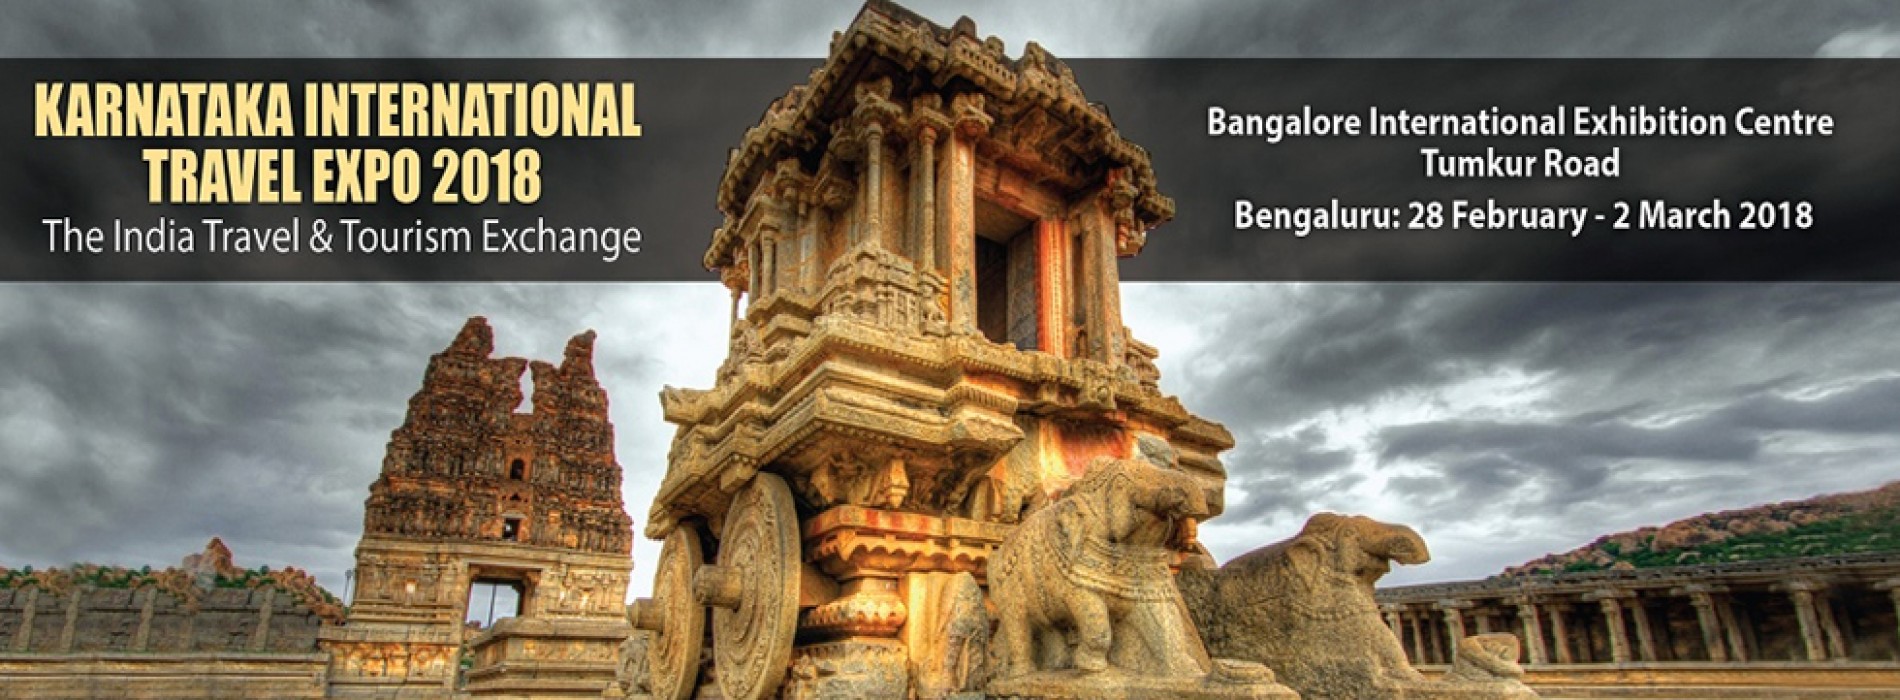 Karnataka Tourism to organize inaugural edition of ‘Karnataka International Travel Expo’ in Bengaluru